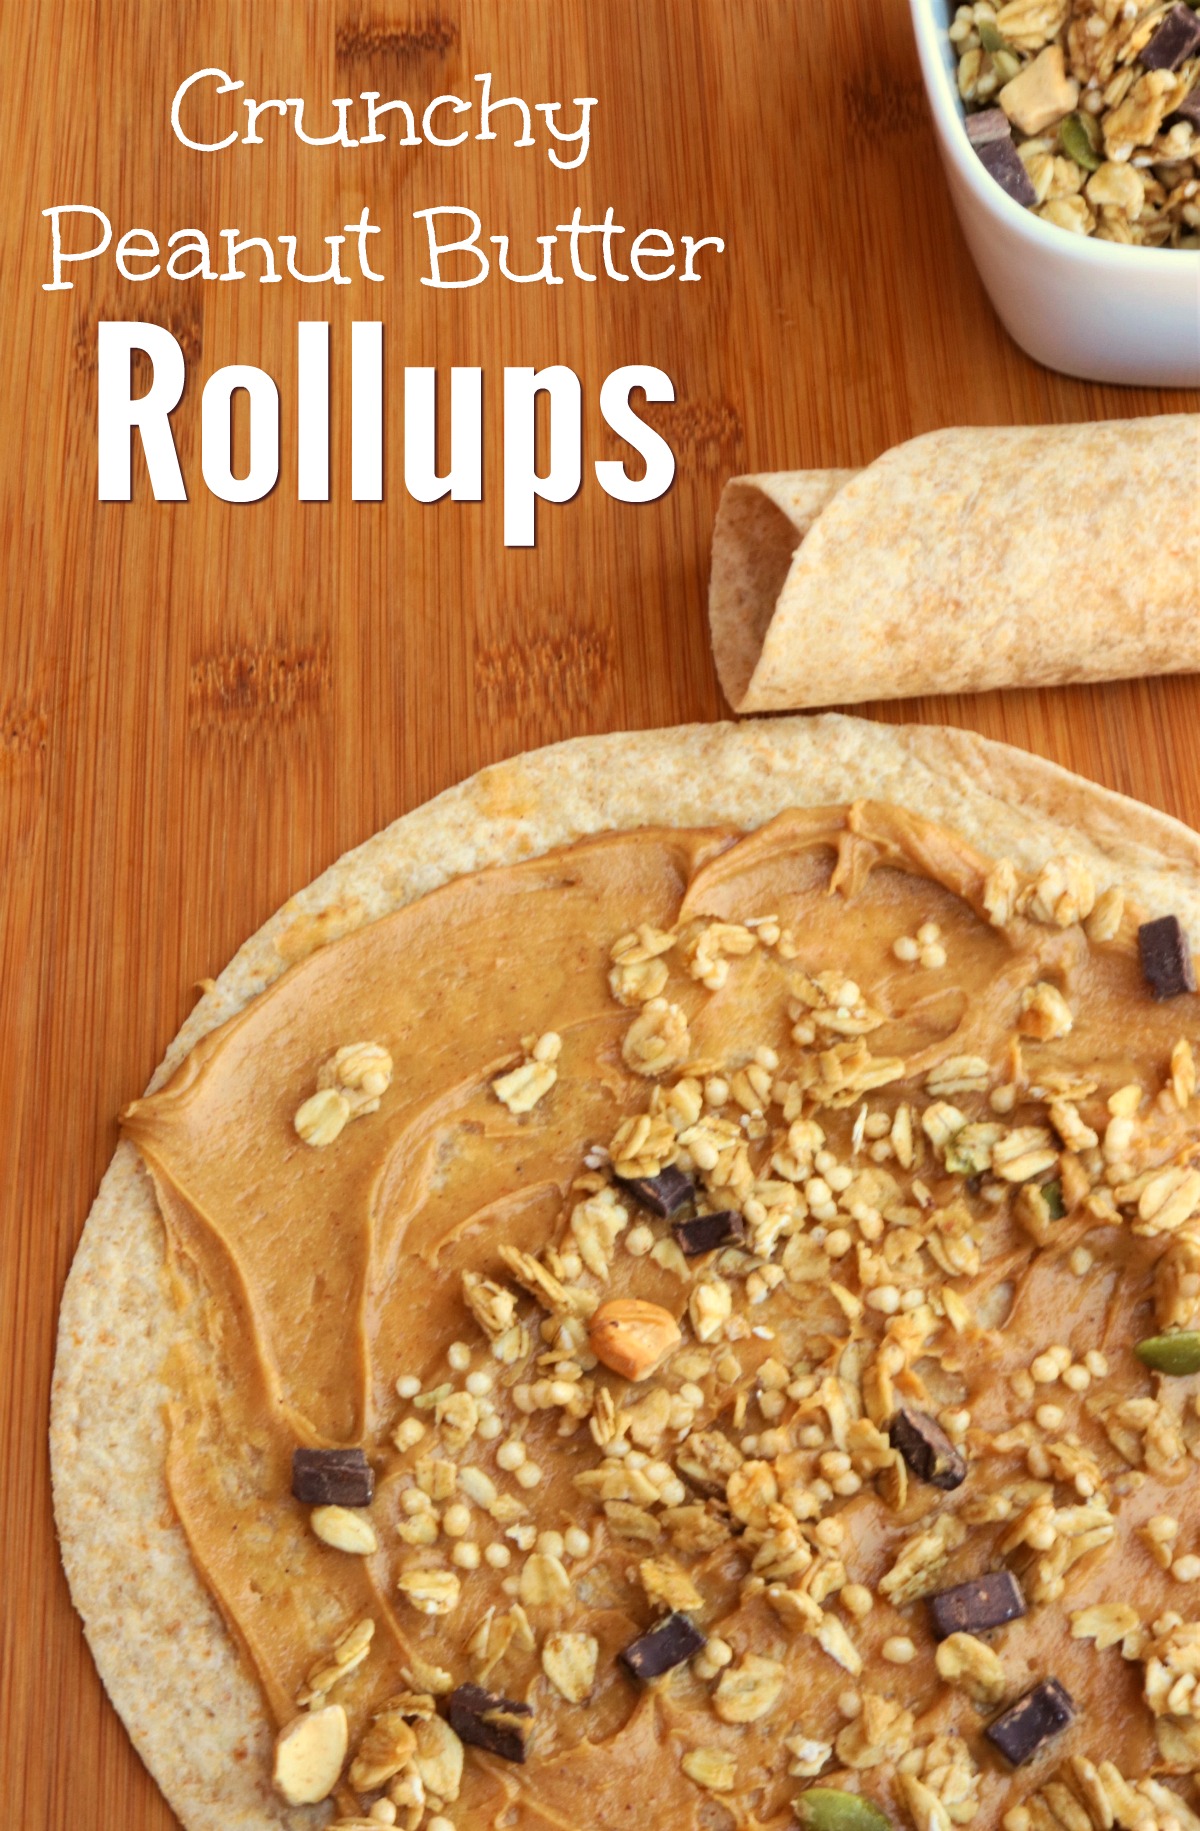 Crunchy Peanut Butter Rollups from 5DollarDinners.com